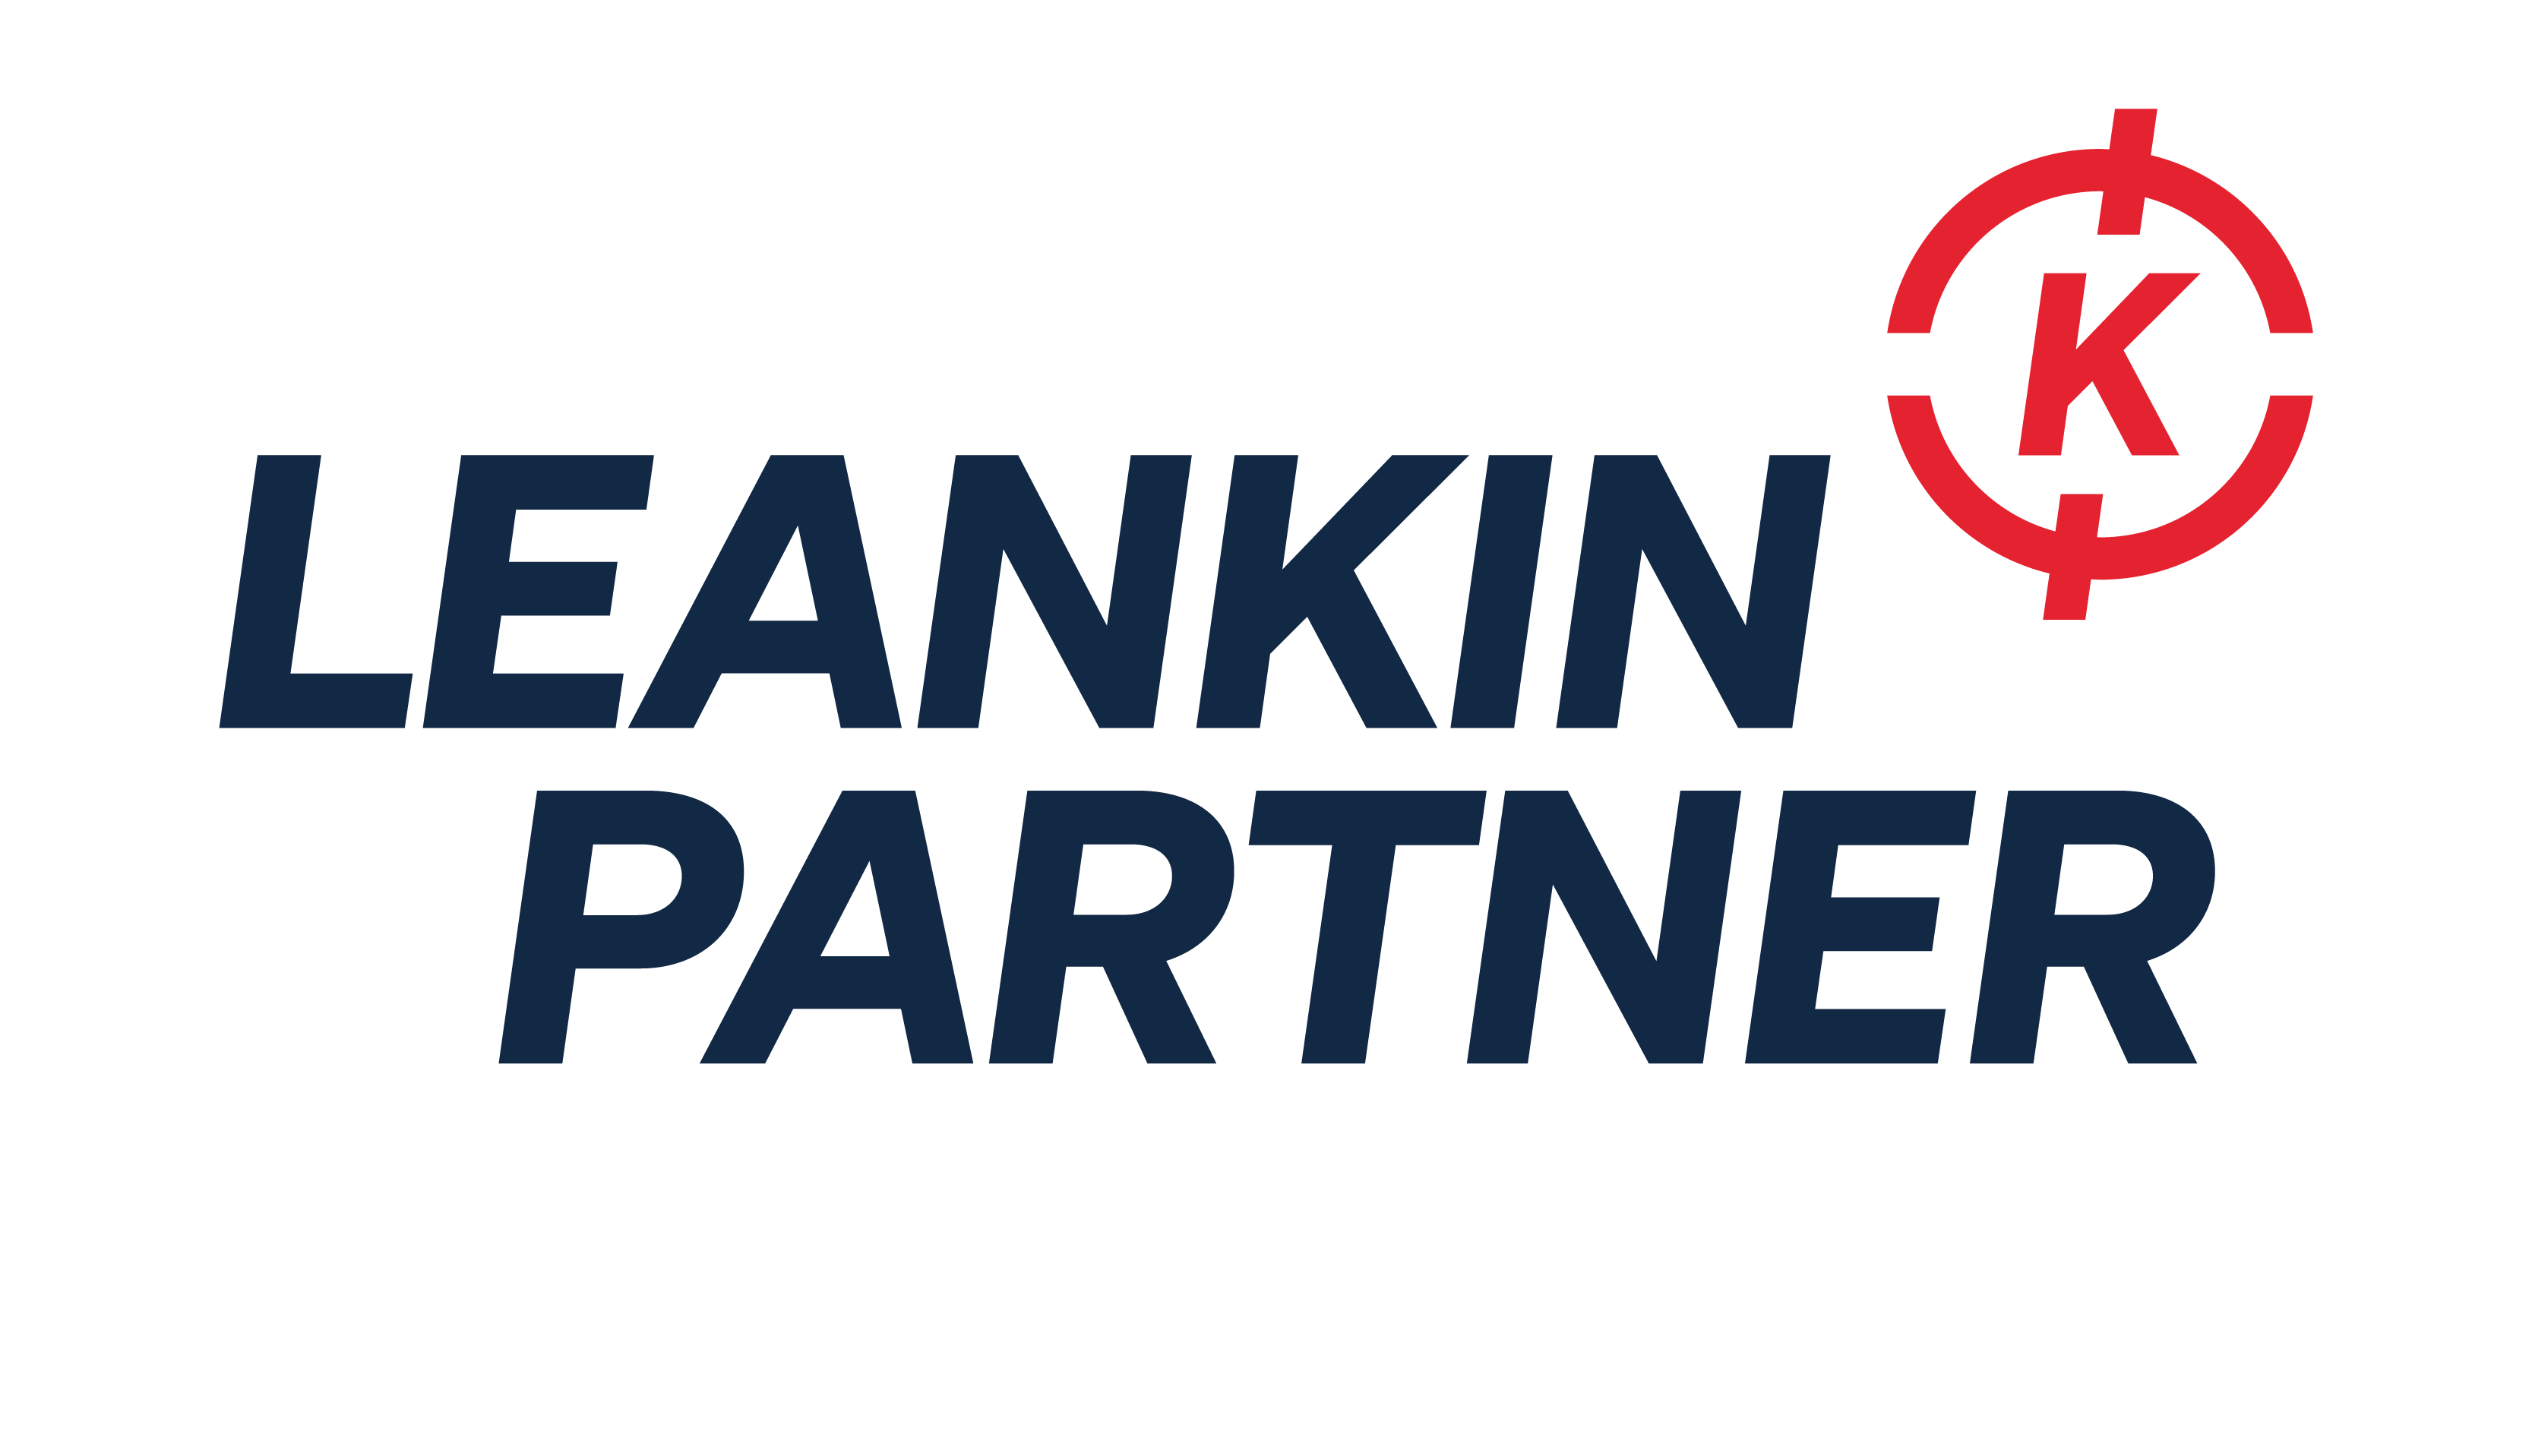 https://leankin-partner.com/wp-content/uploads/2022/08/LeankinPartner_HQ.png